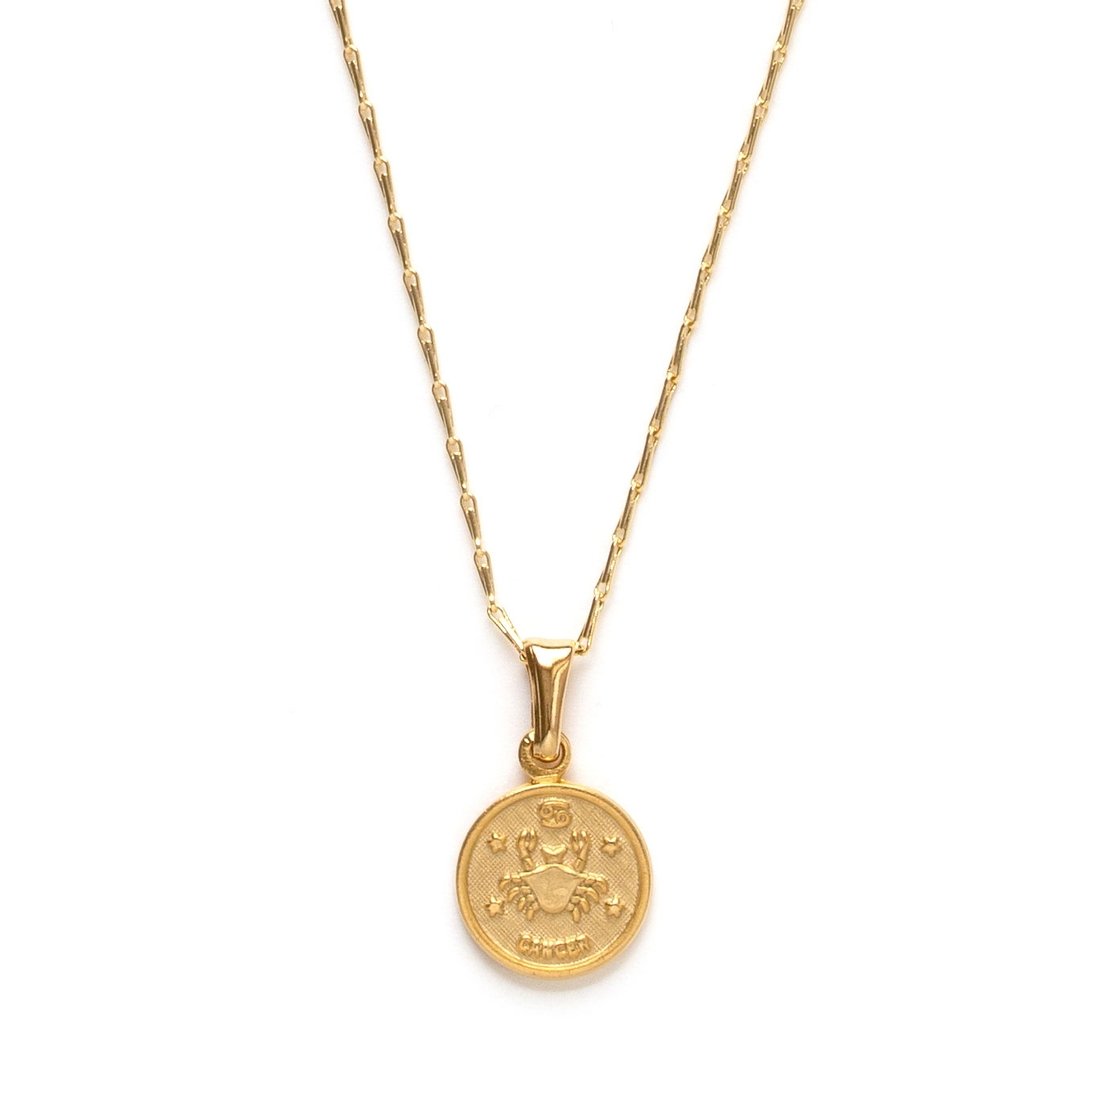 Zodiac Medallion Necklace - Cancer